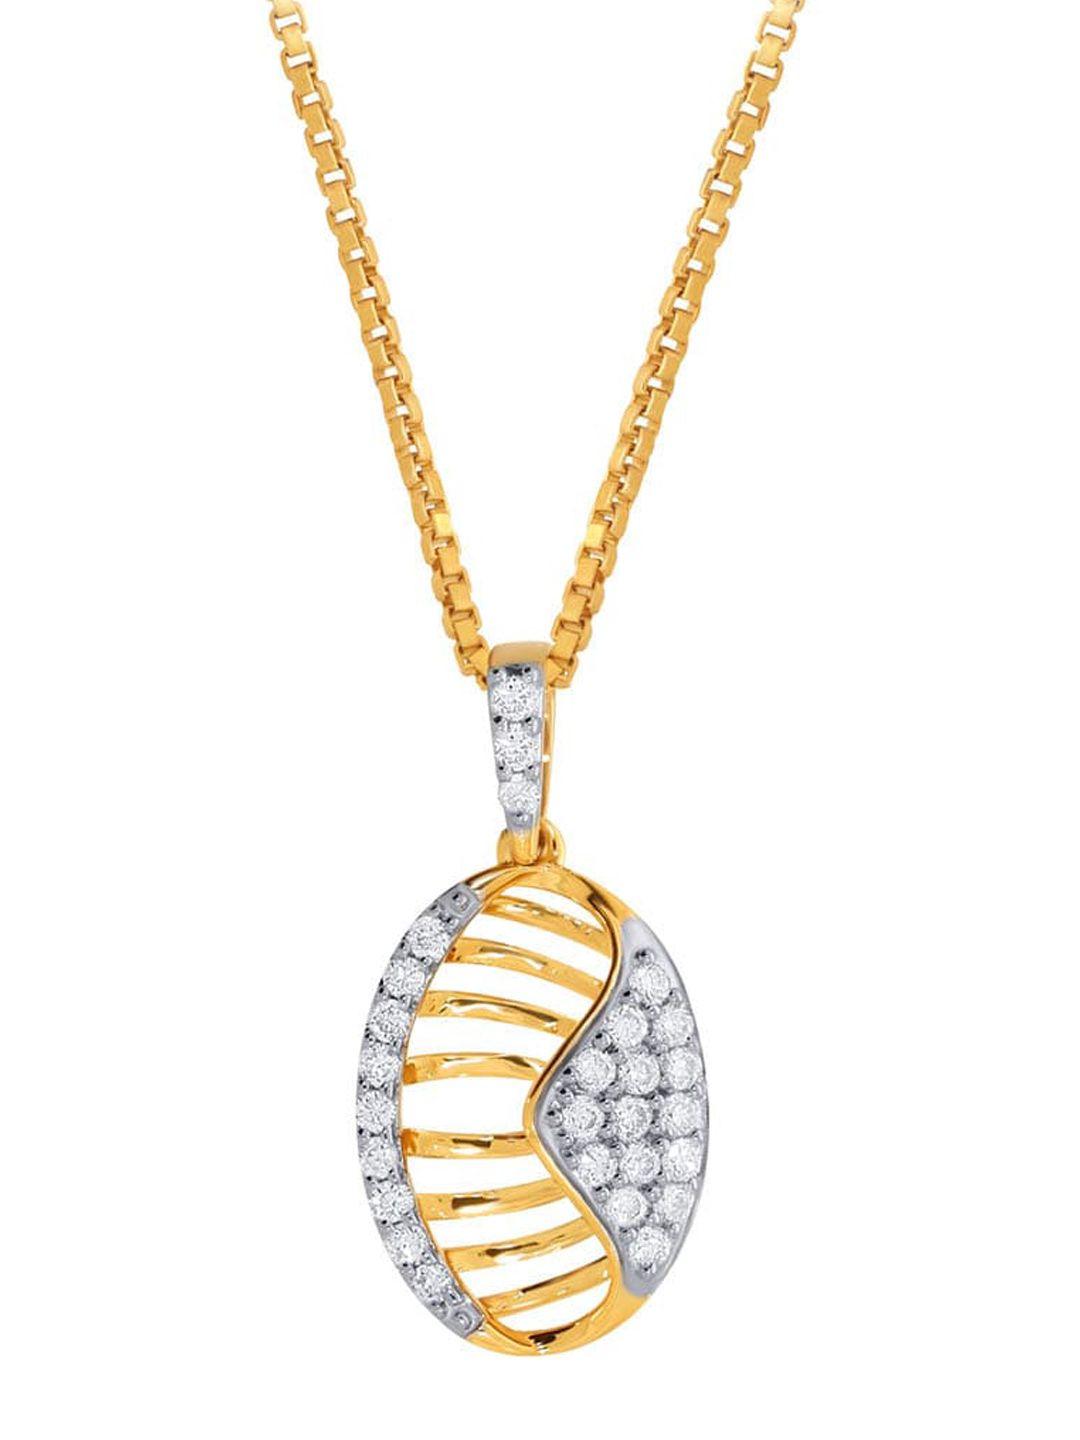 senco-chic-creation-18kt-gold-diamond-studded-pendant-3.0gm